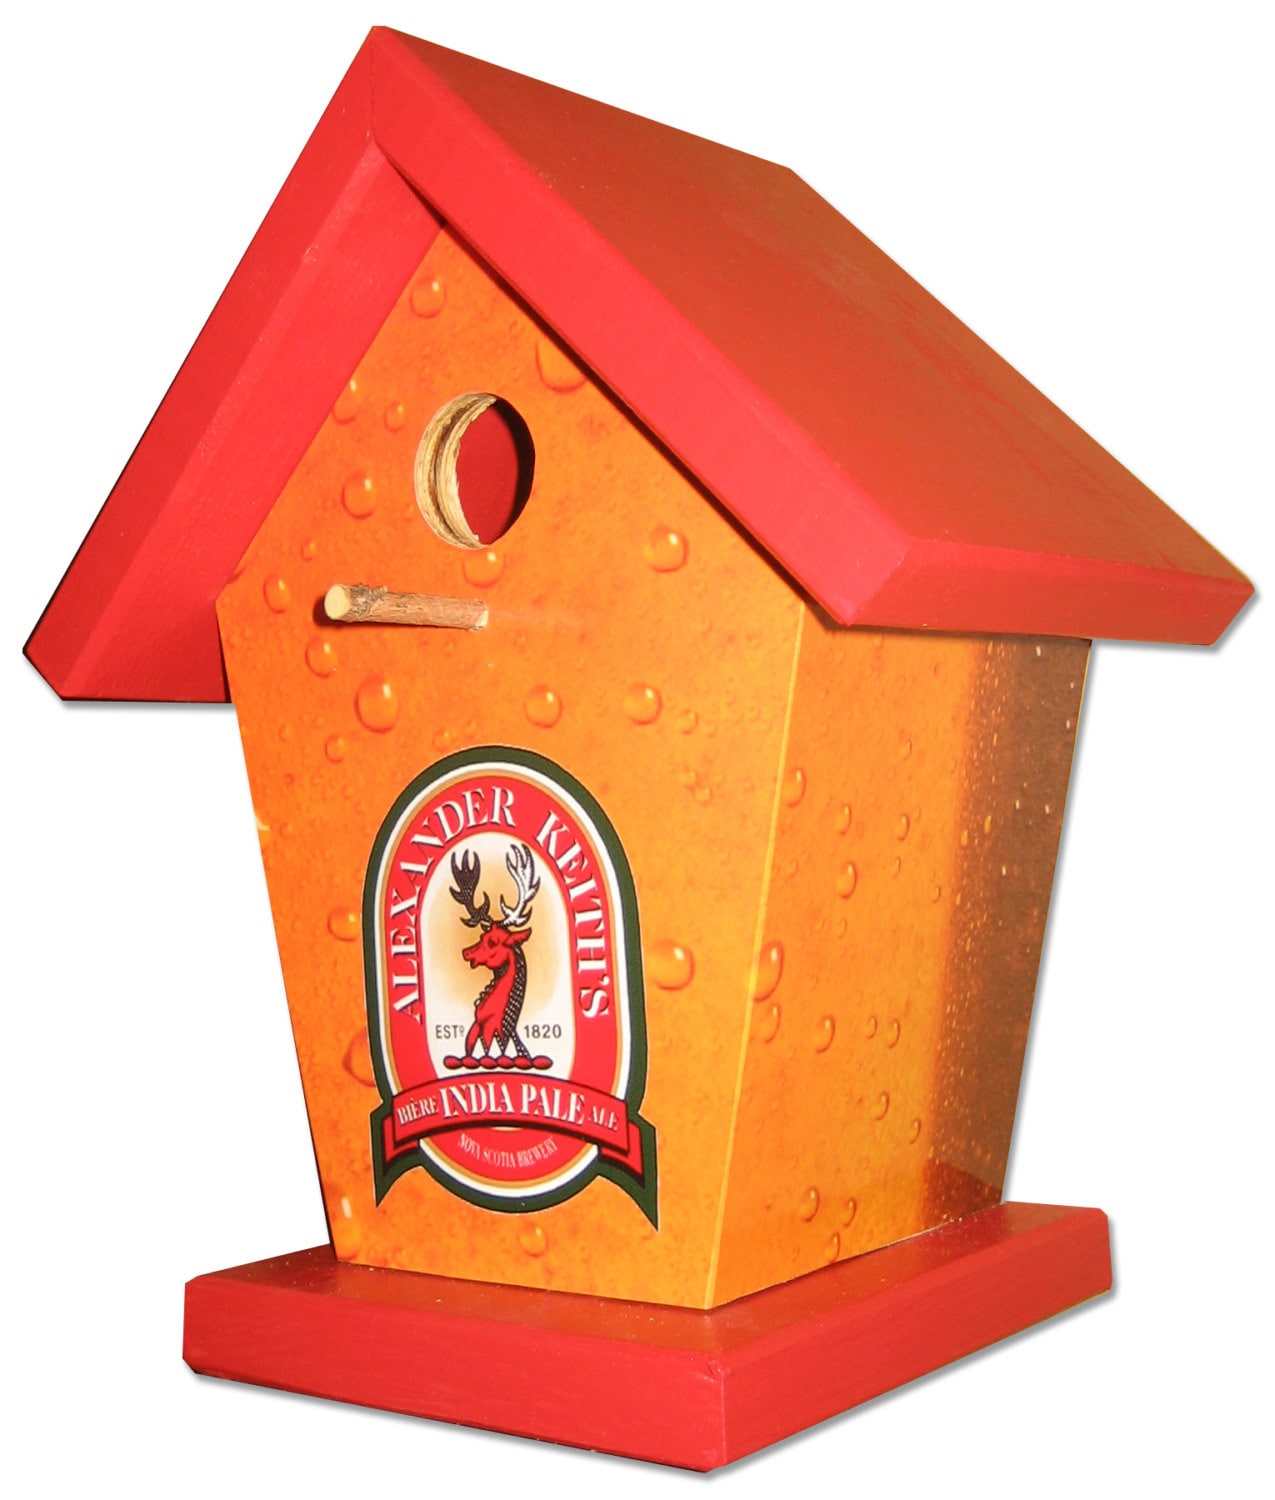 Molson Canadian Birdhouse/Feeder